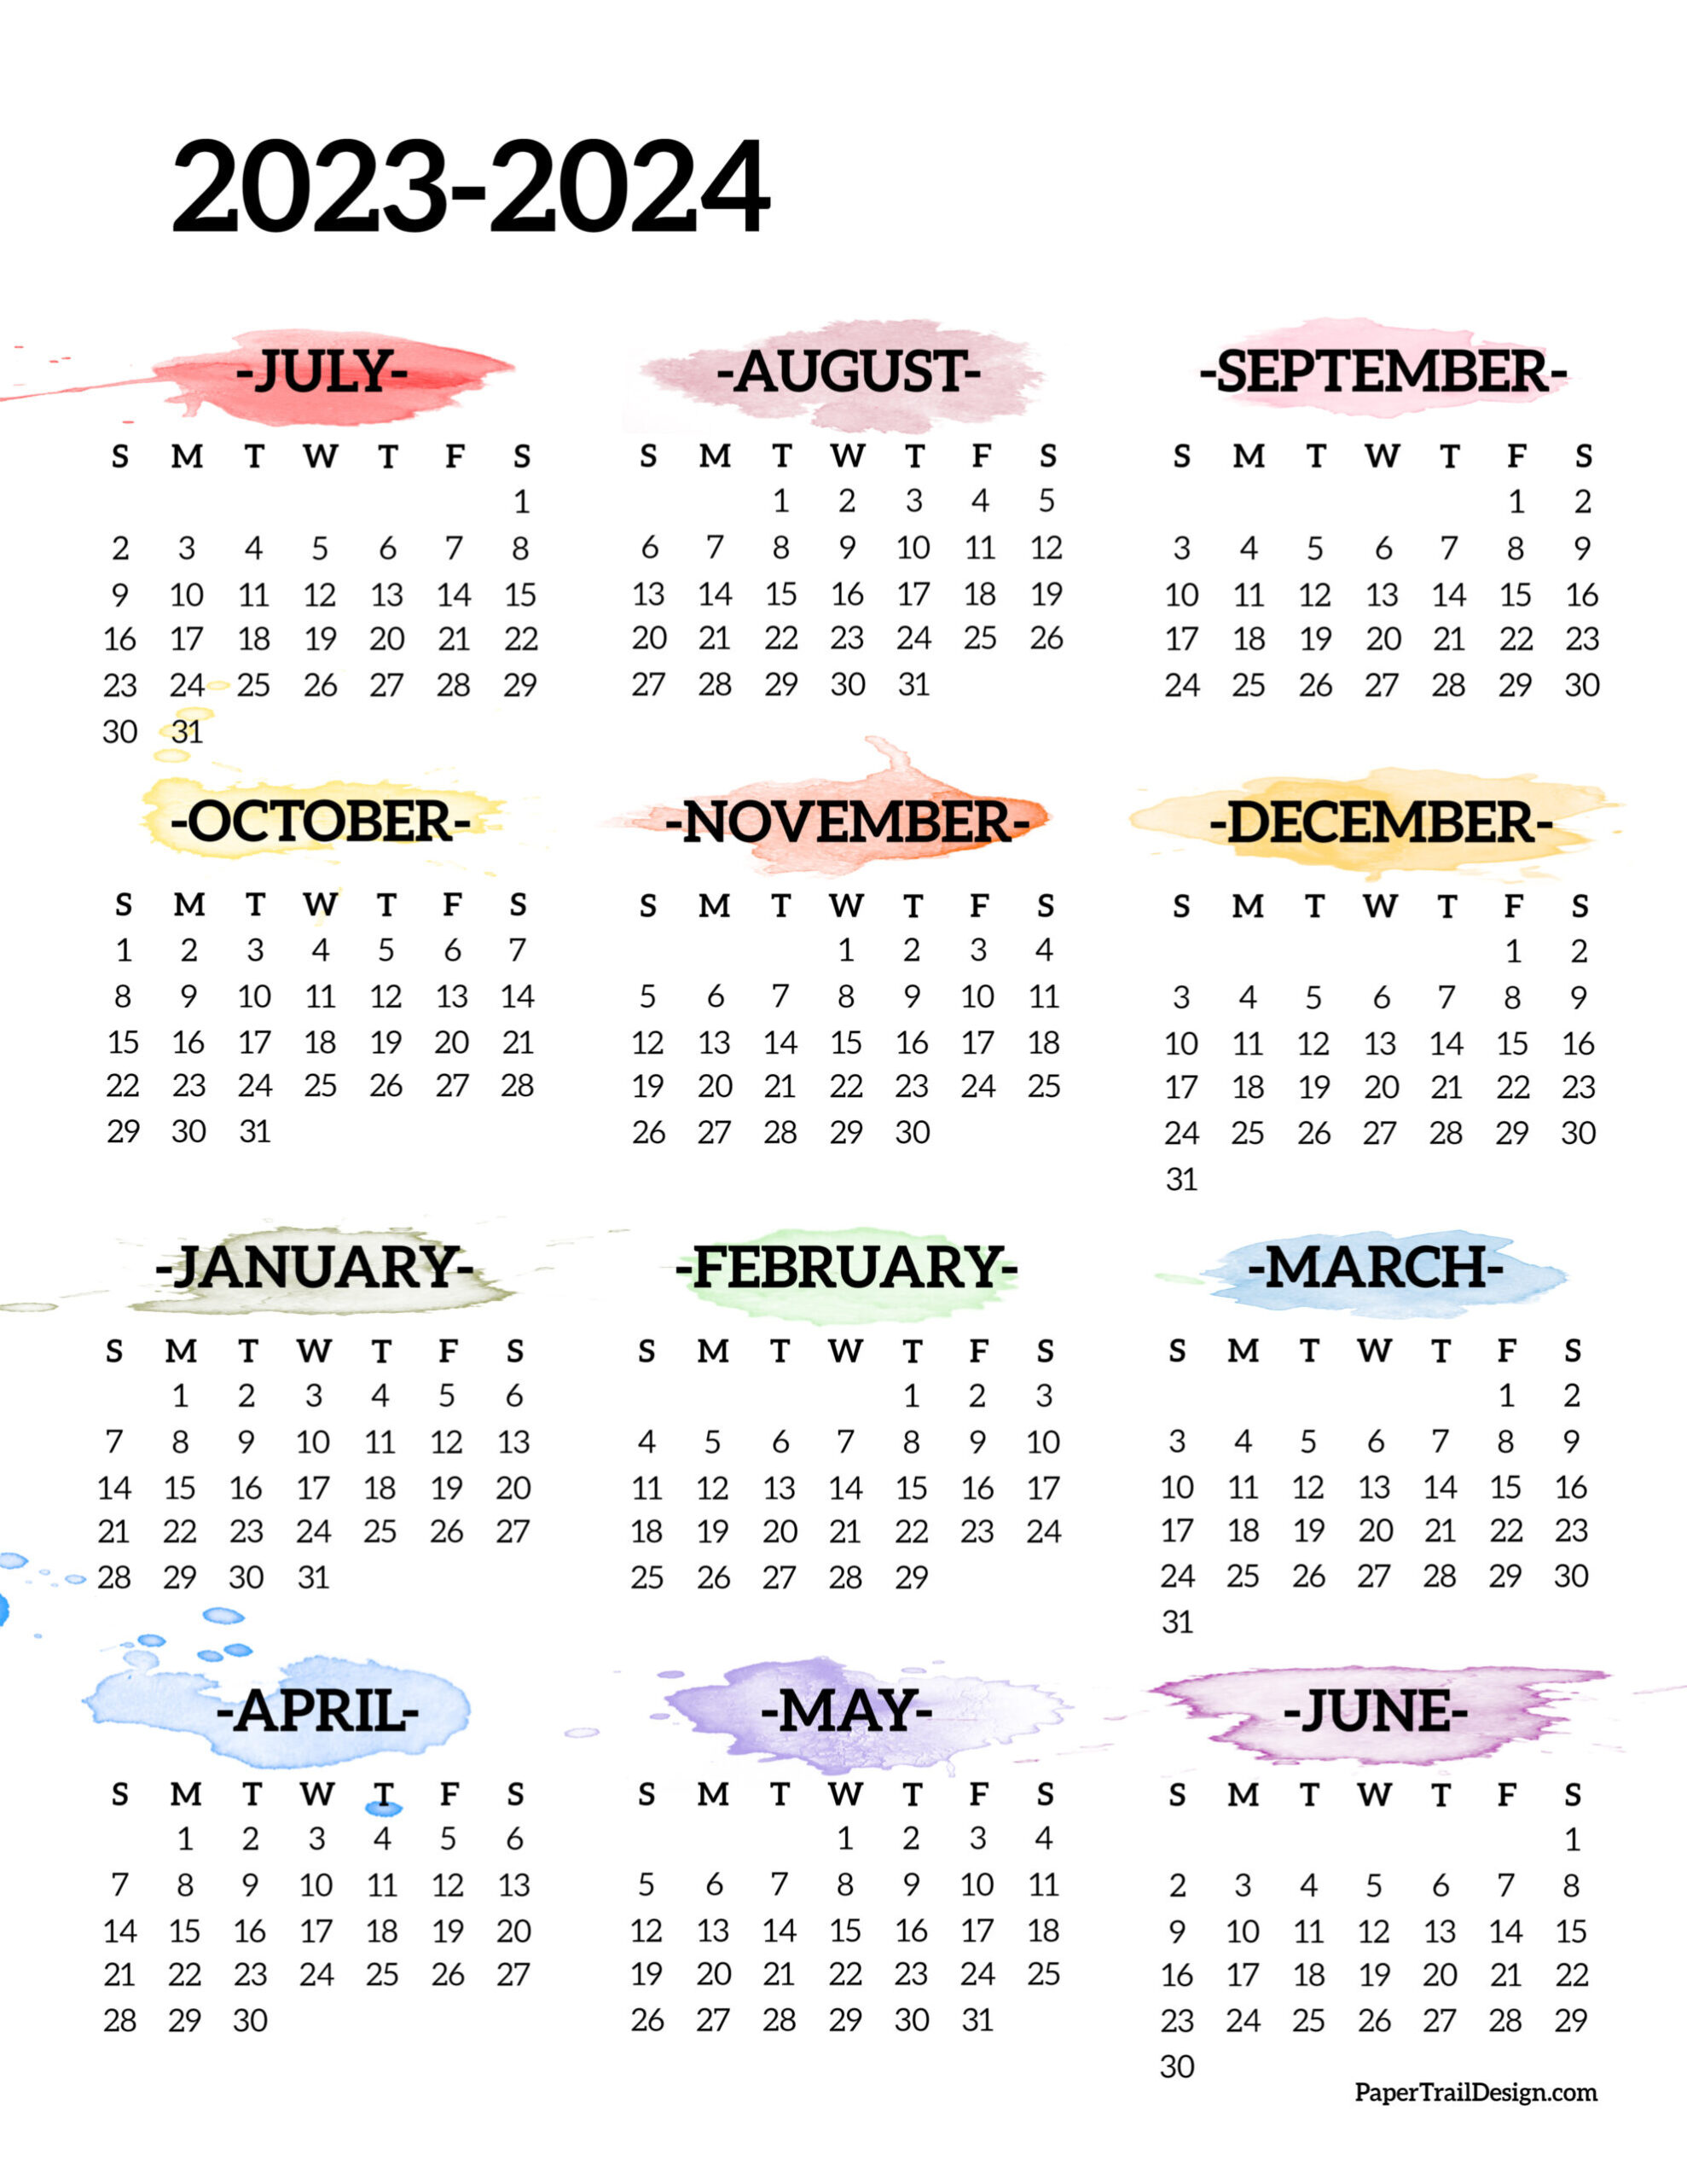 2023-2024 School Year Calendar Free Printable - Paper Trail Design inside Free Printable Calendar August 2023-June 2024